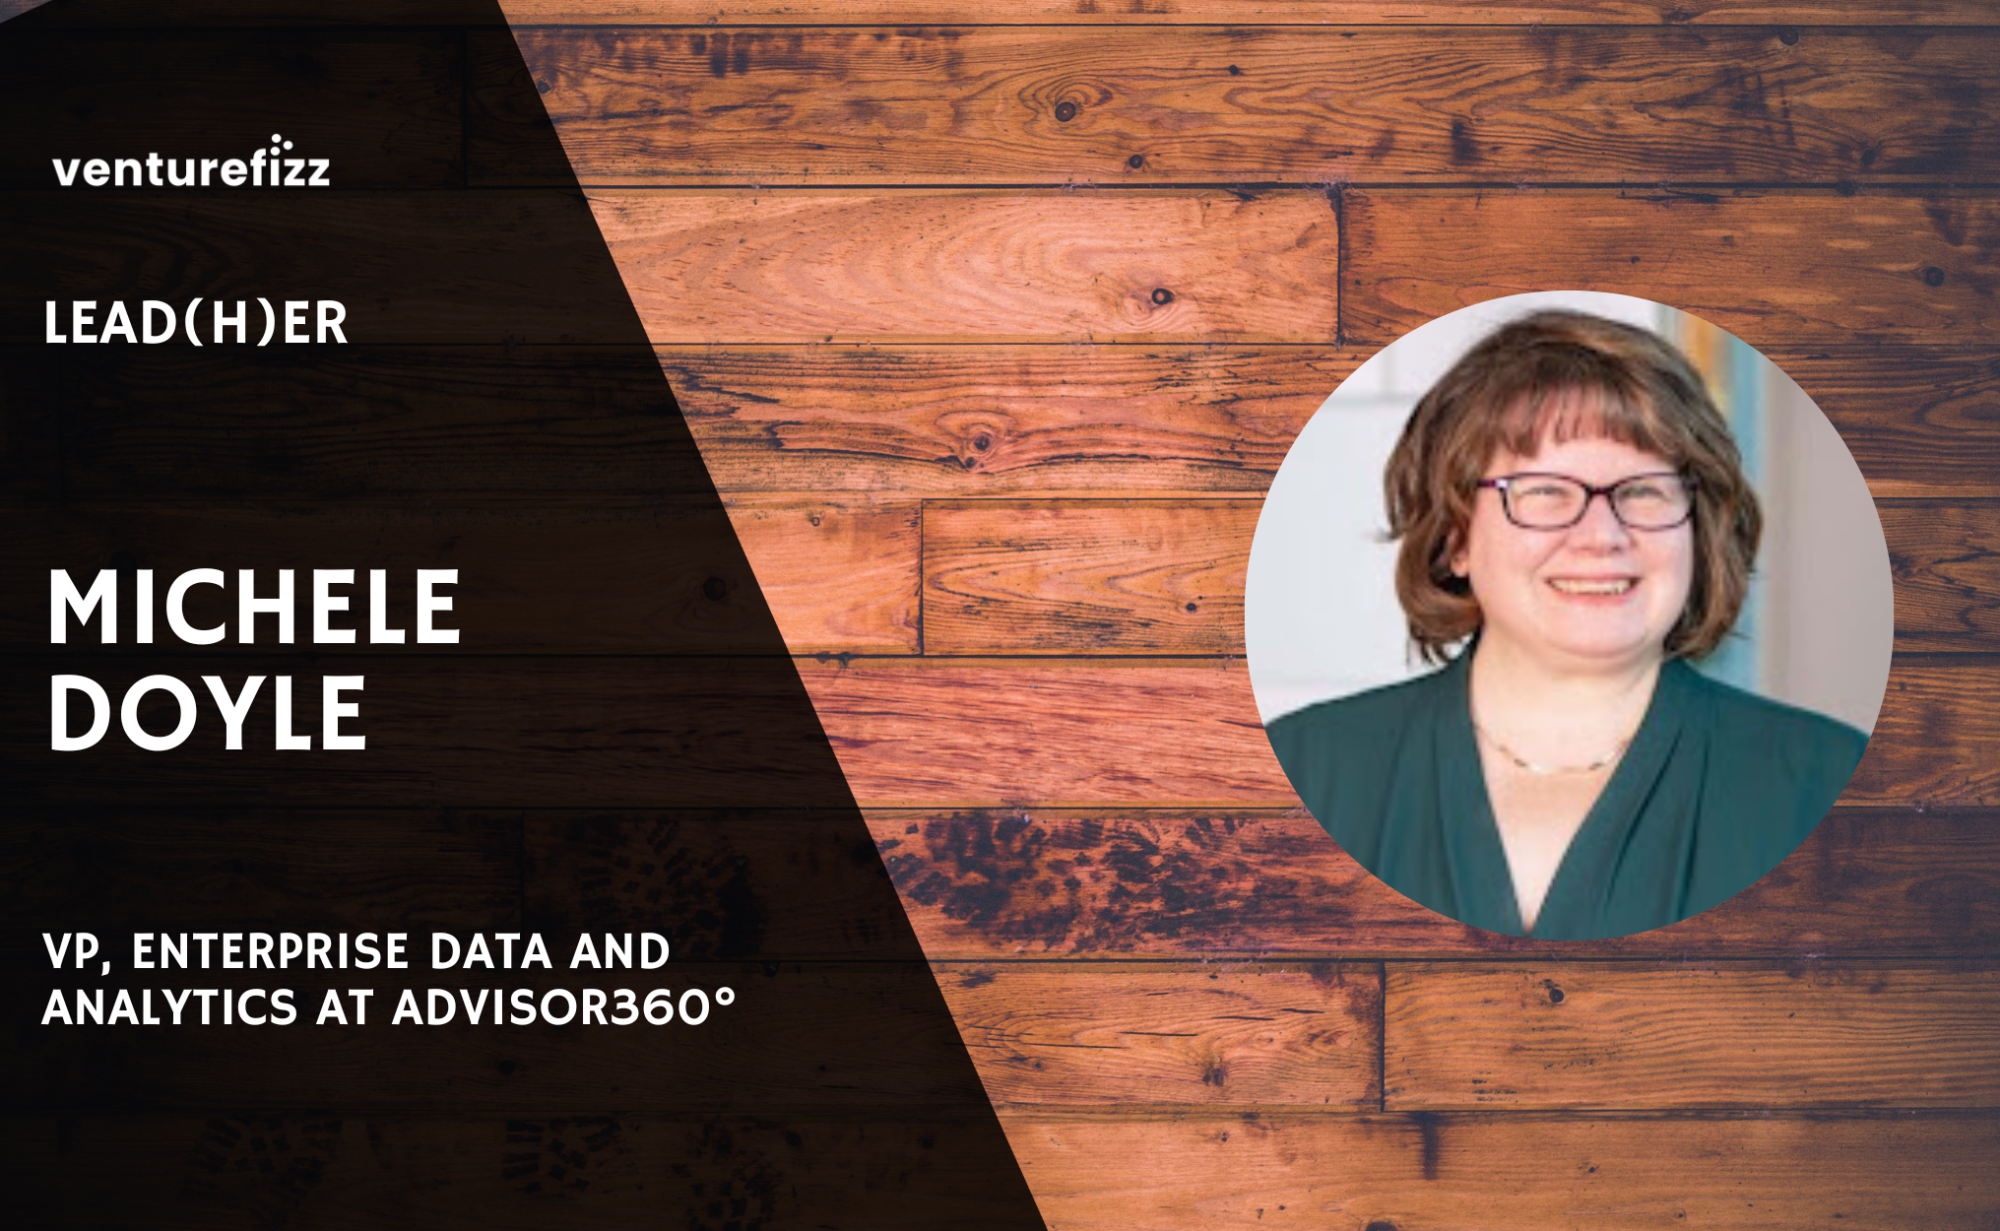 Lead(H)er Profile - Michele Doyle, VP, Enterprise Data and Analytics at Advisor360° banner image